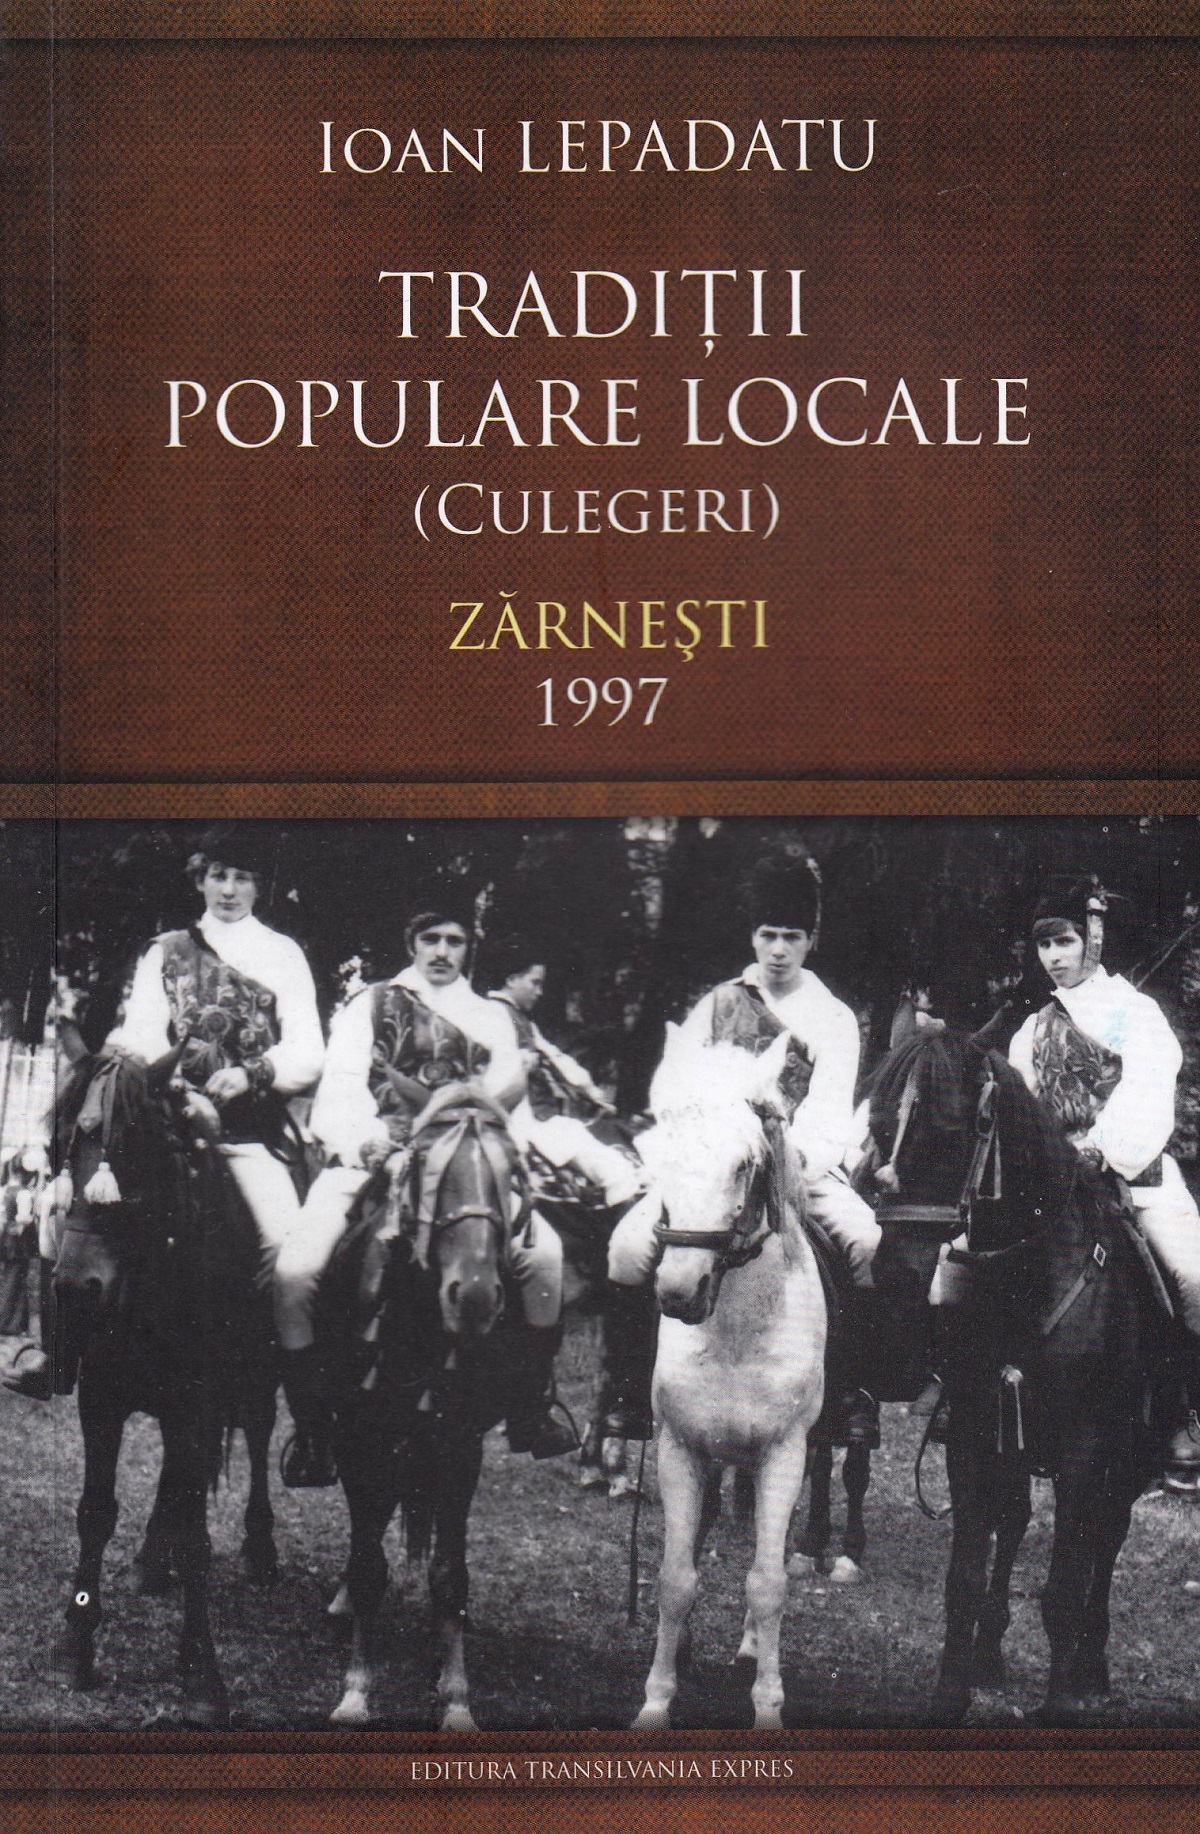 Traditii populare locale. Zarnesti 1997 - Ioan Lepadatu